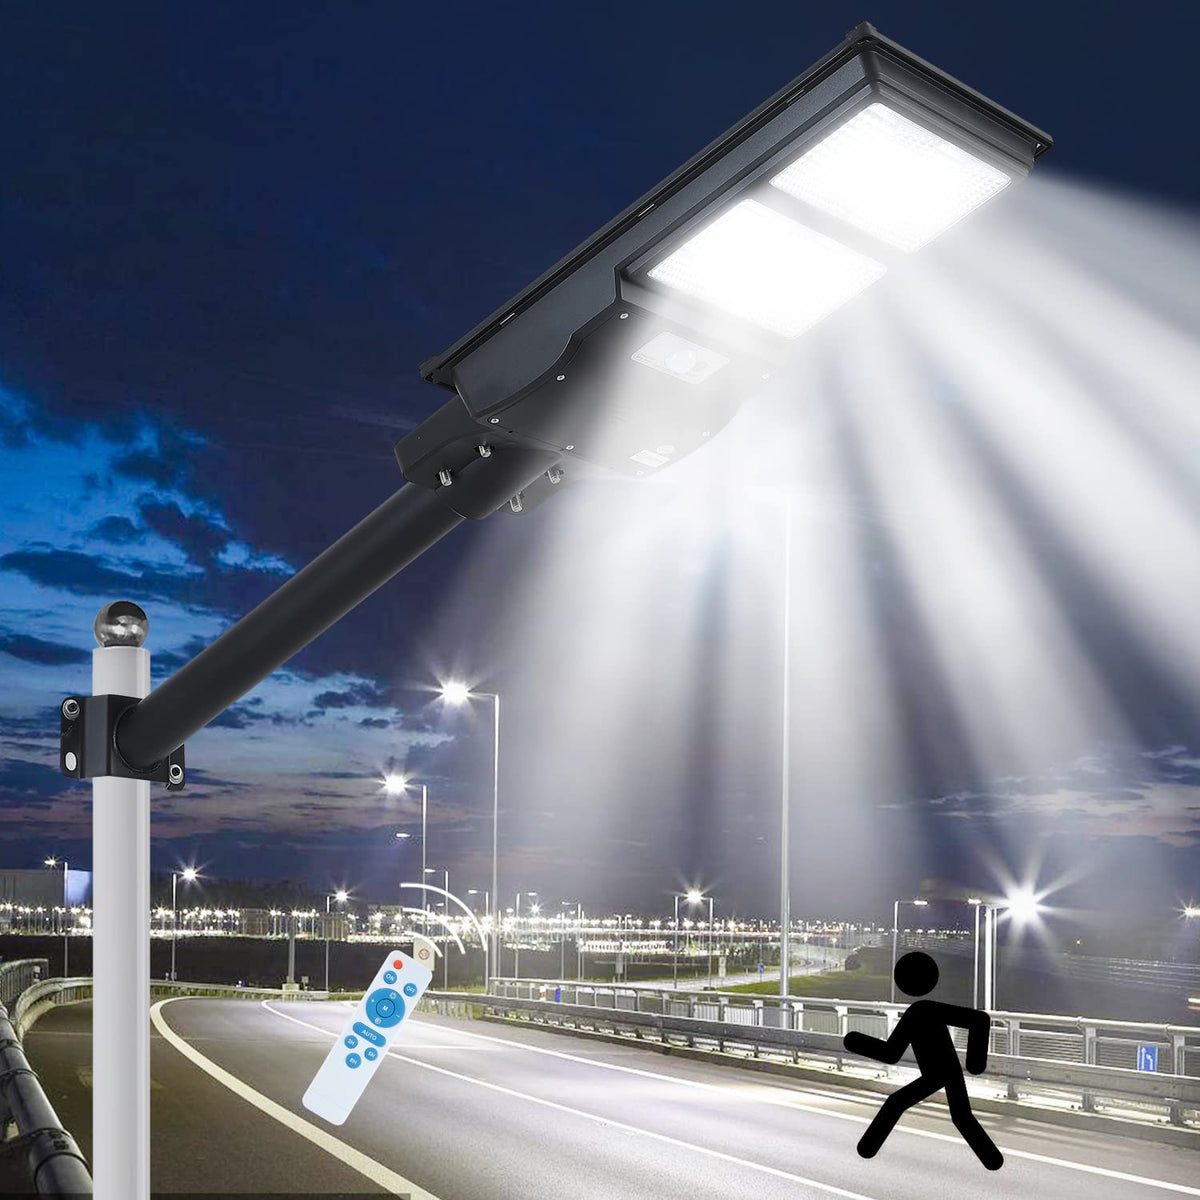 500W LED Solar Street Lights Outdoor， Dusk to Dawn Security Flood